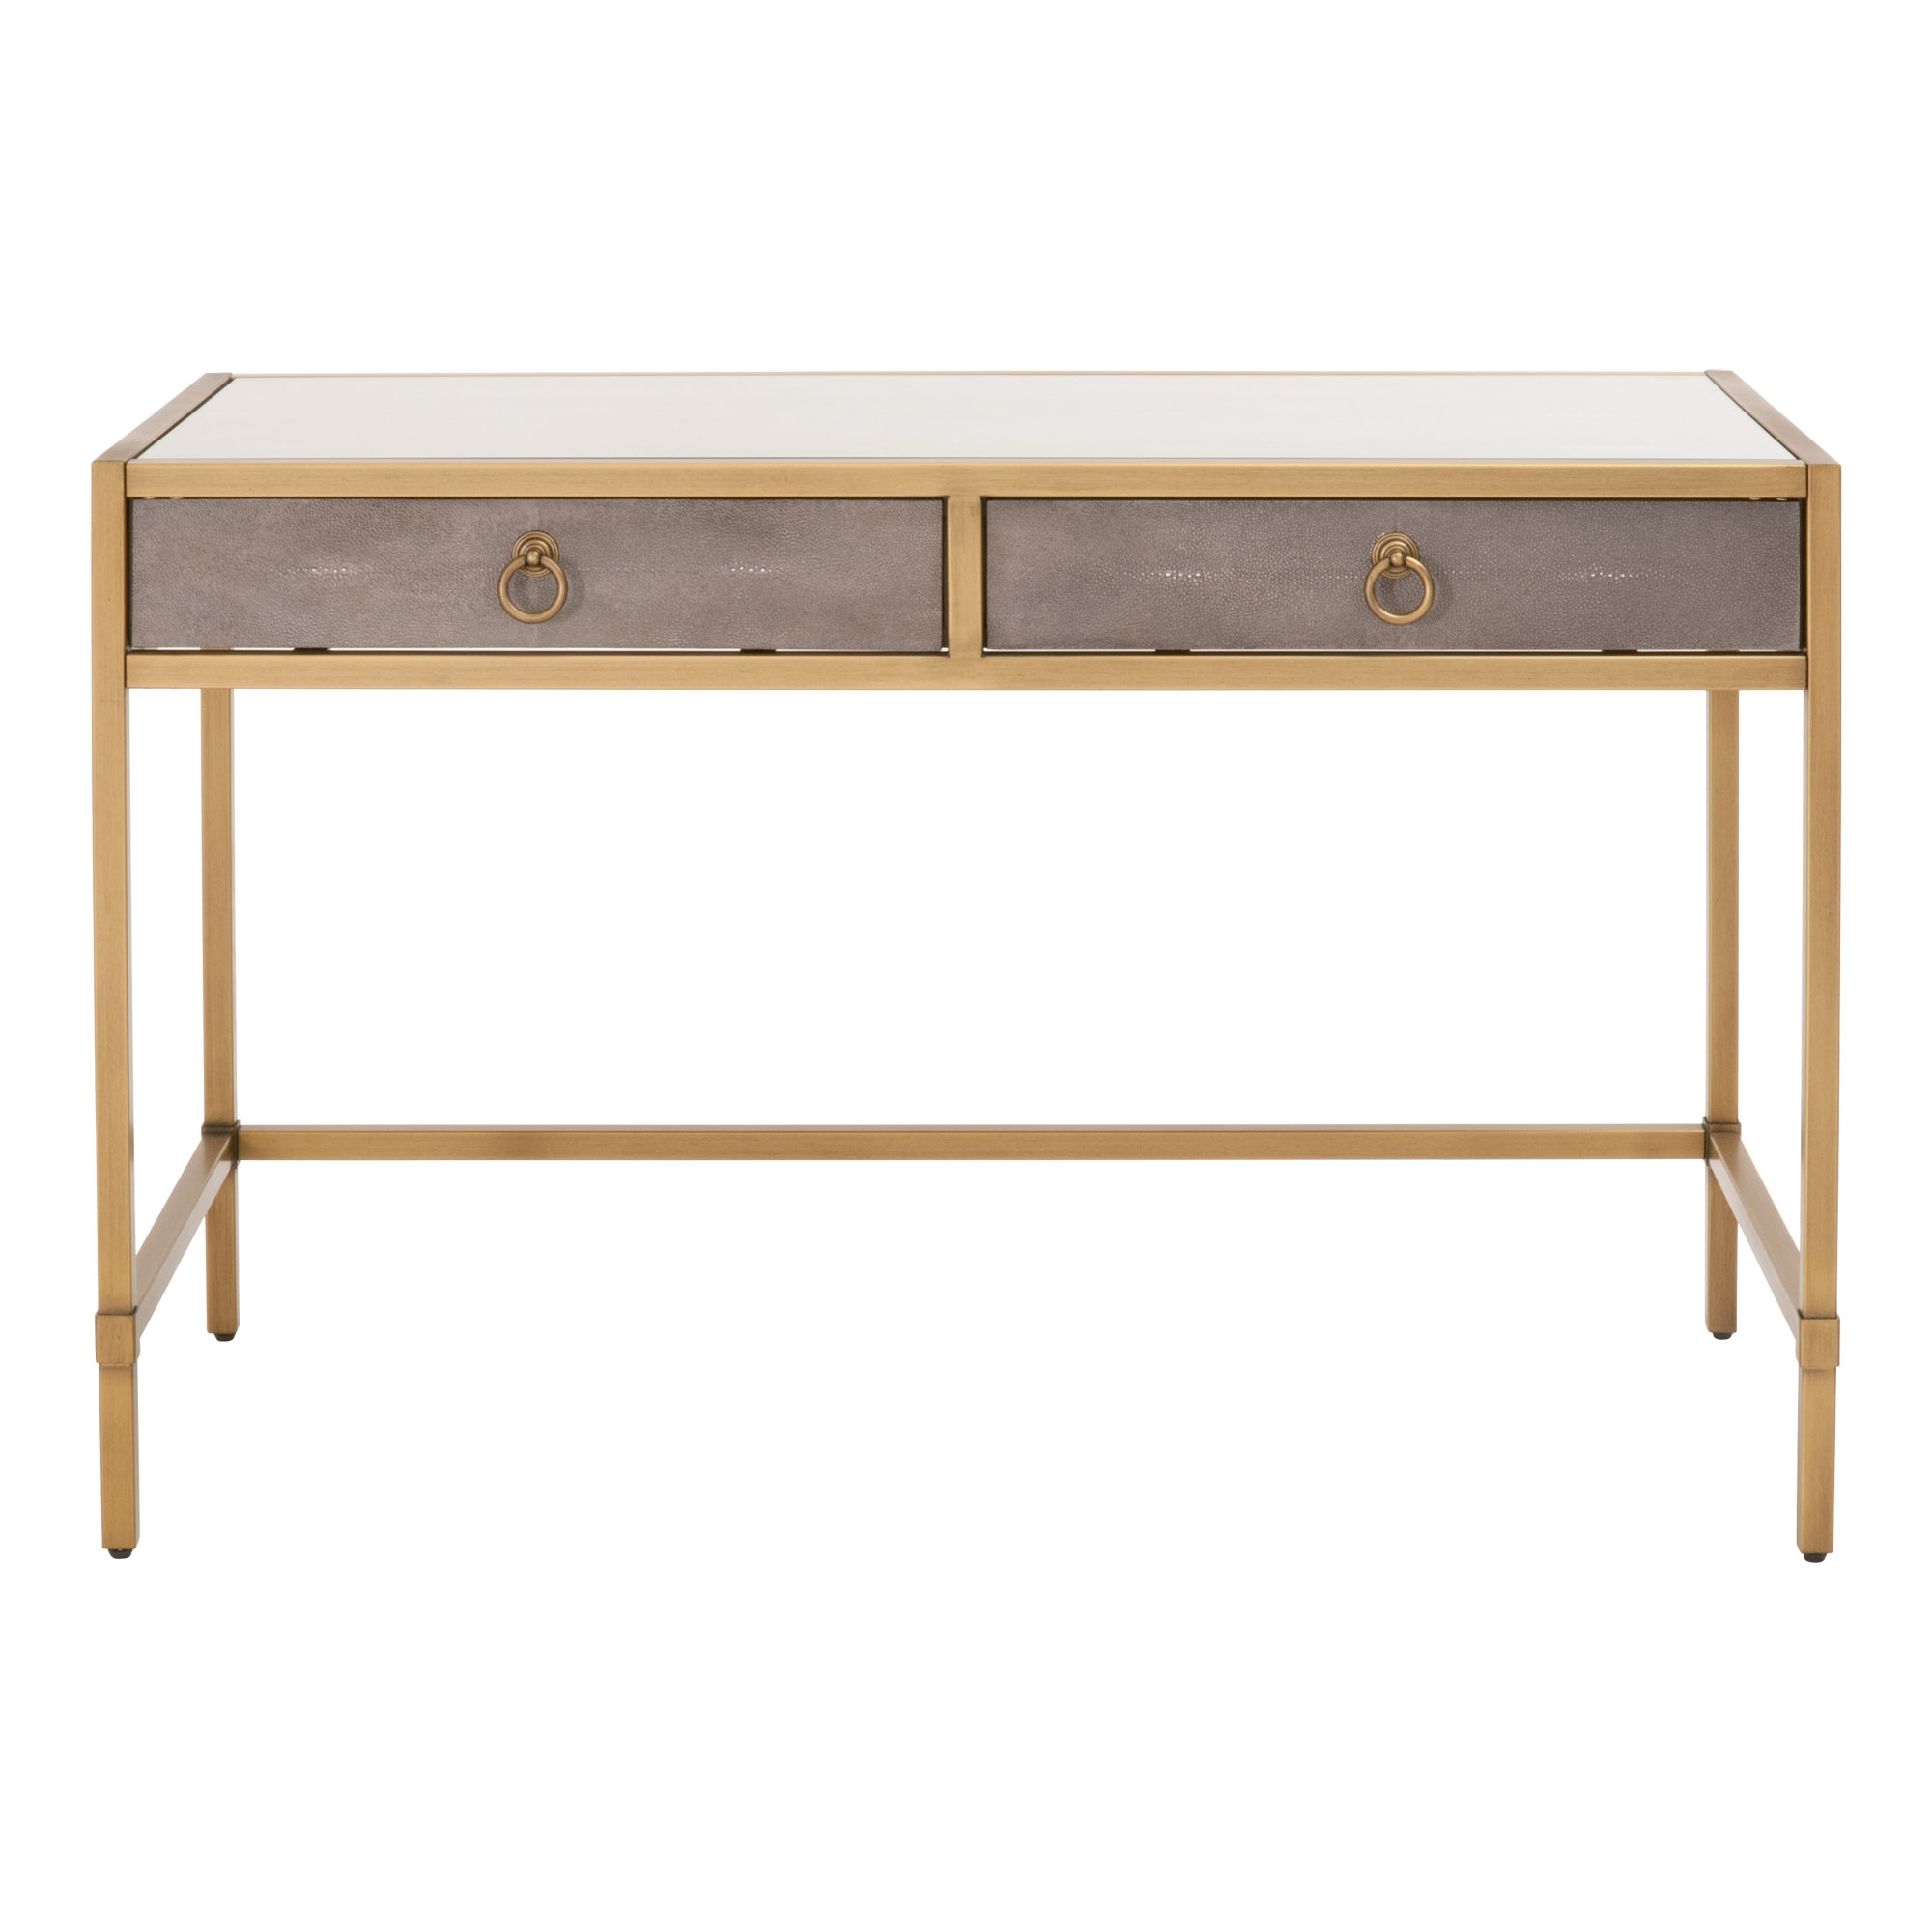 Colette Shagreen Desk, Gray & Gold - Image 0